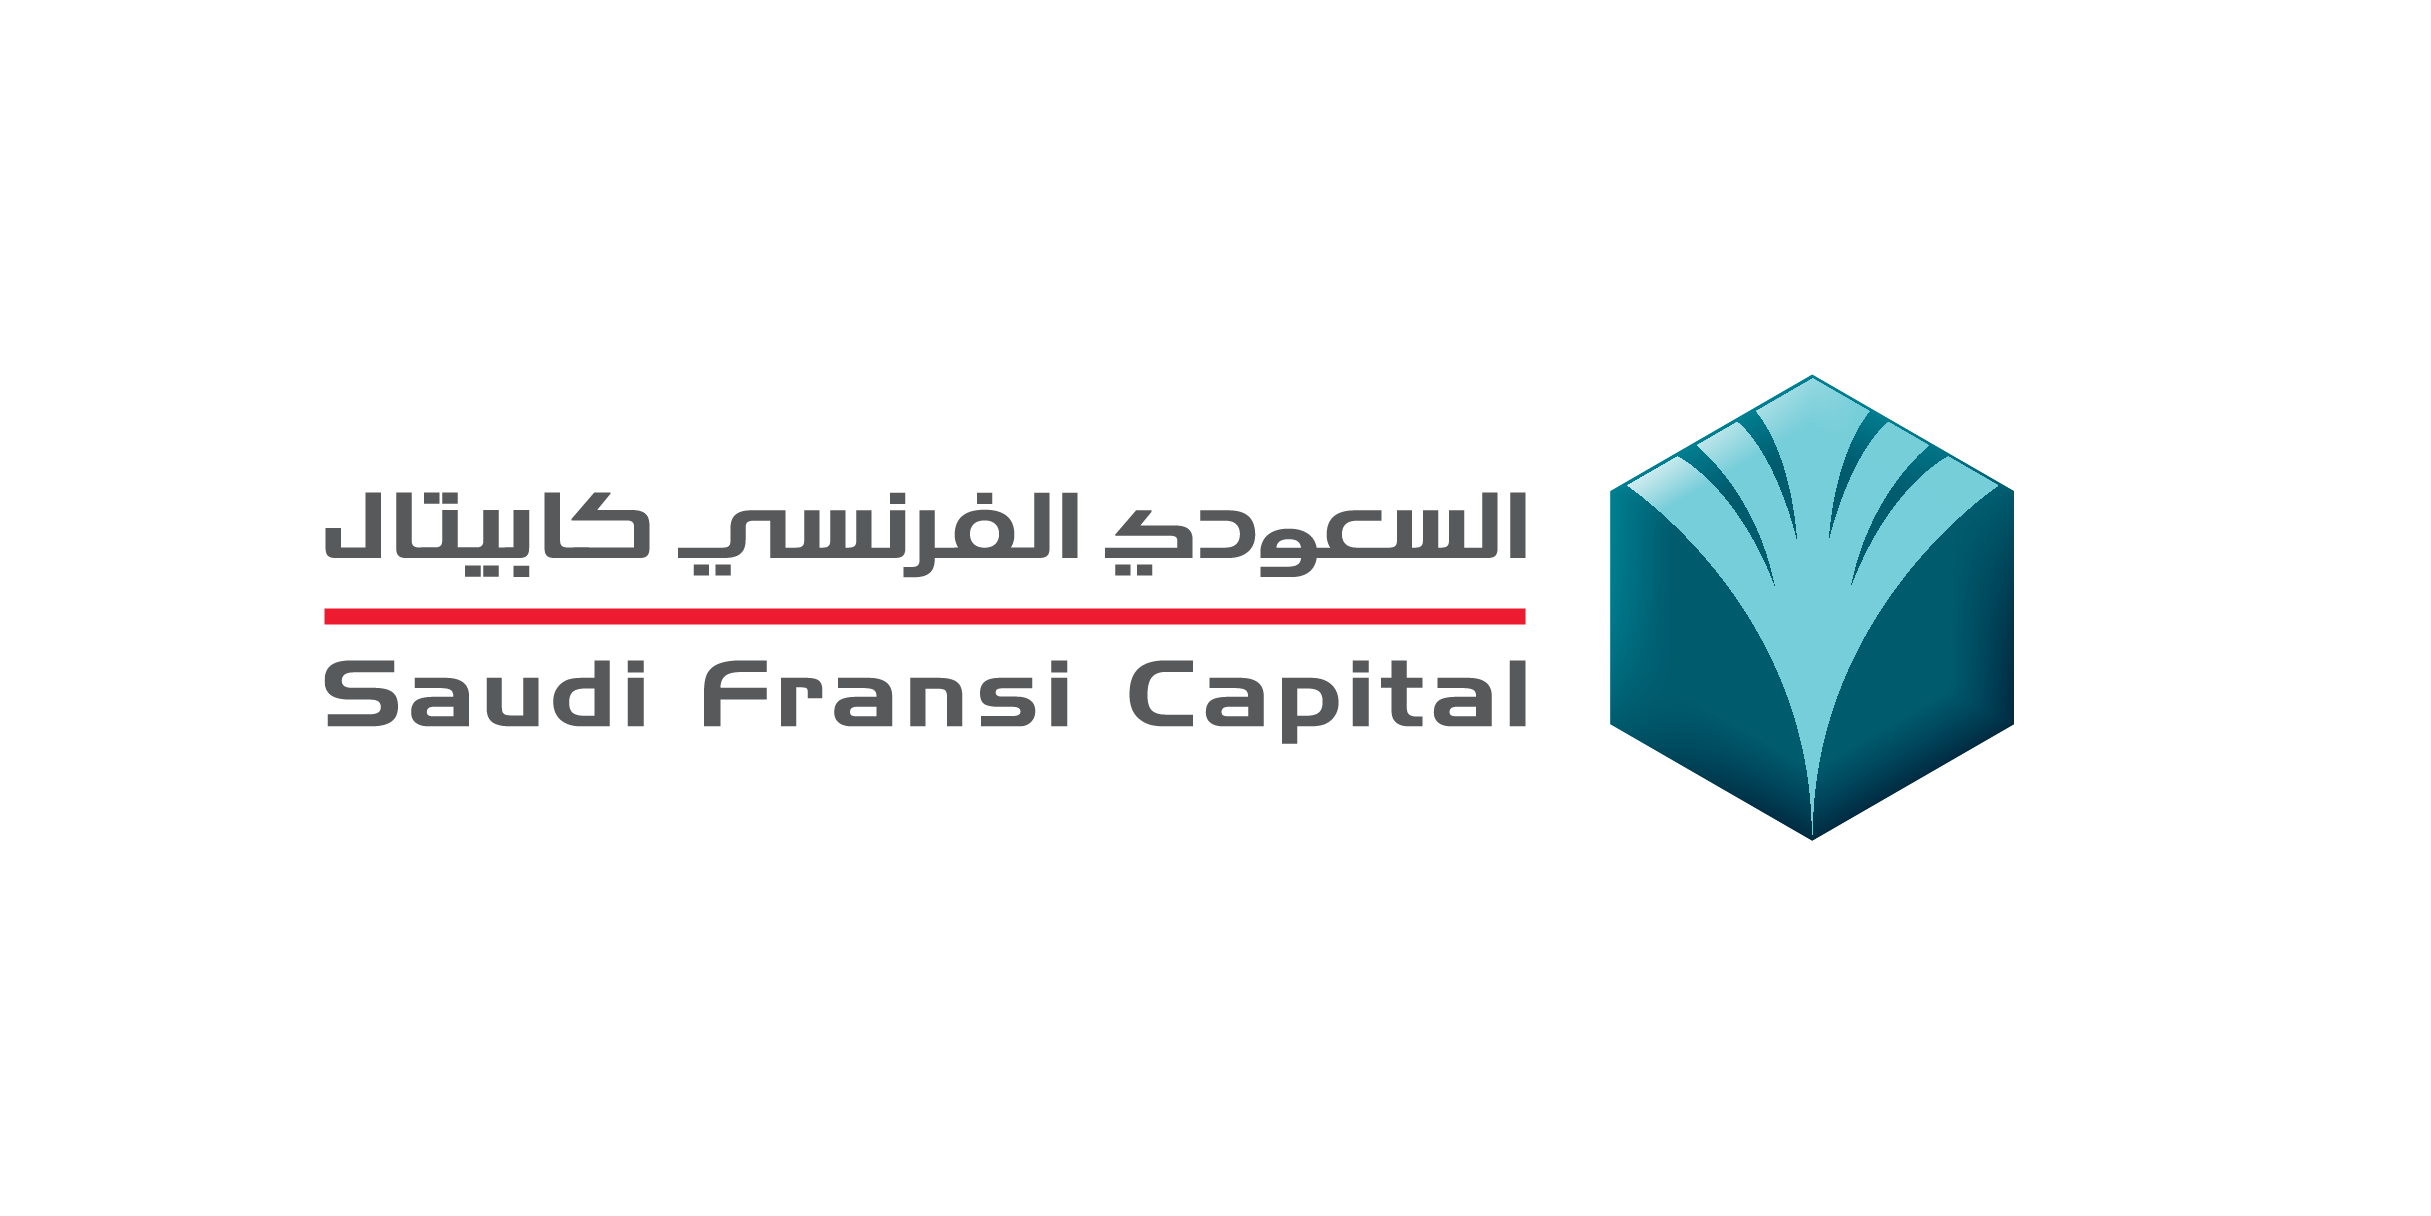 Saudi fransi capital